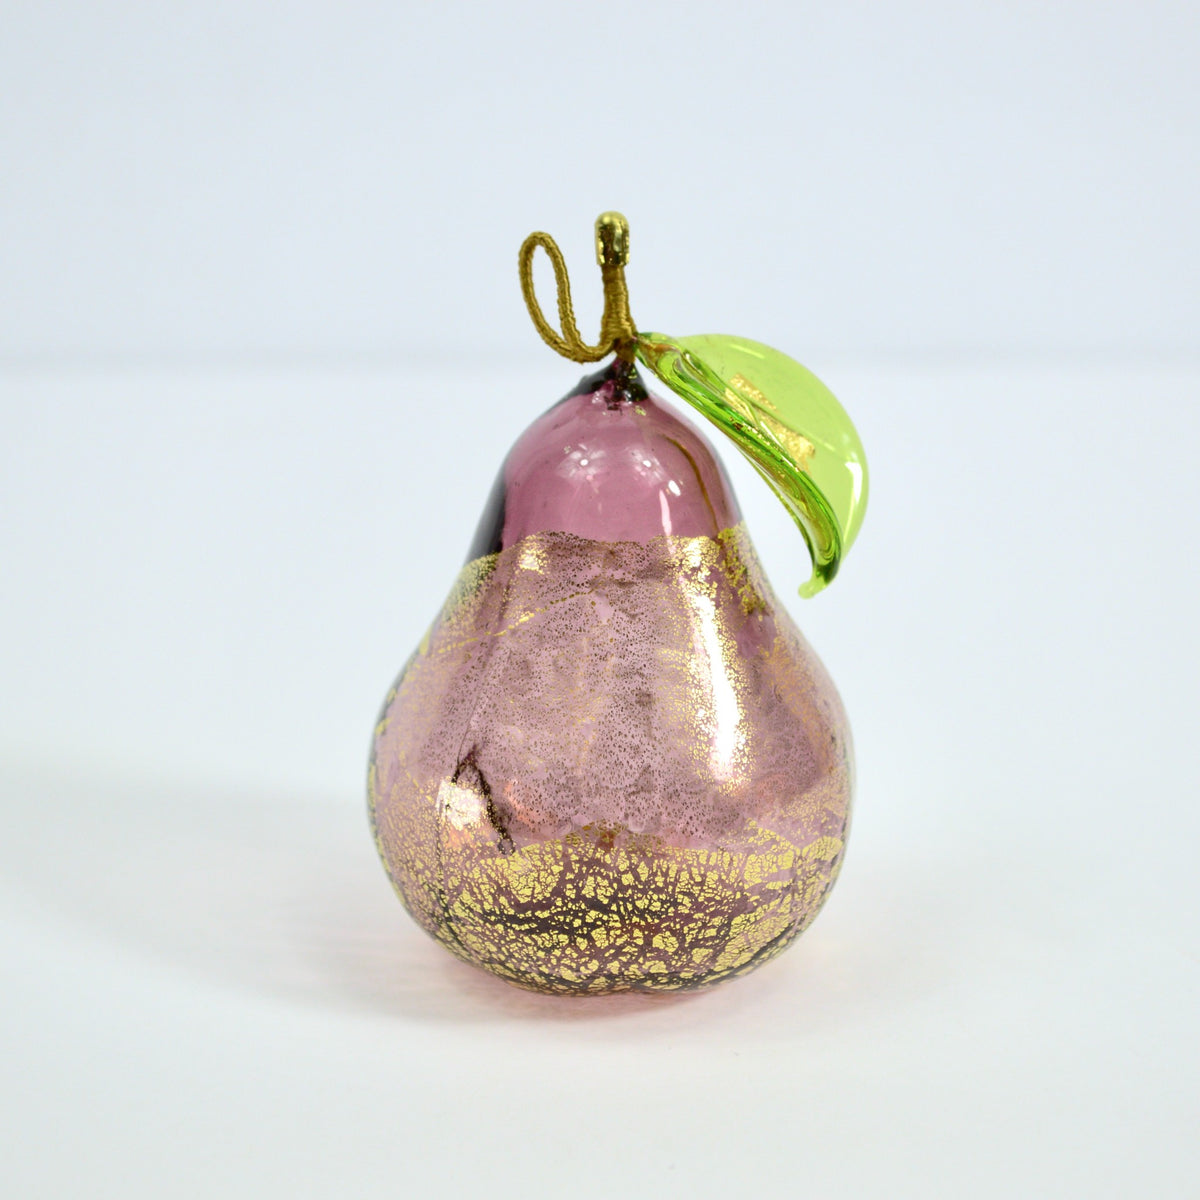 Murano Glass Blown Pear with Gold Foil, Ornament, Made In Italy, Gift Idea - My Italian Decor